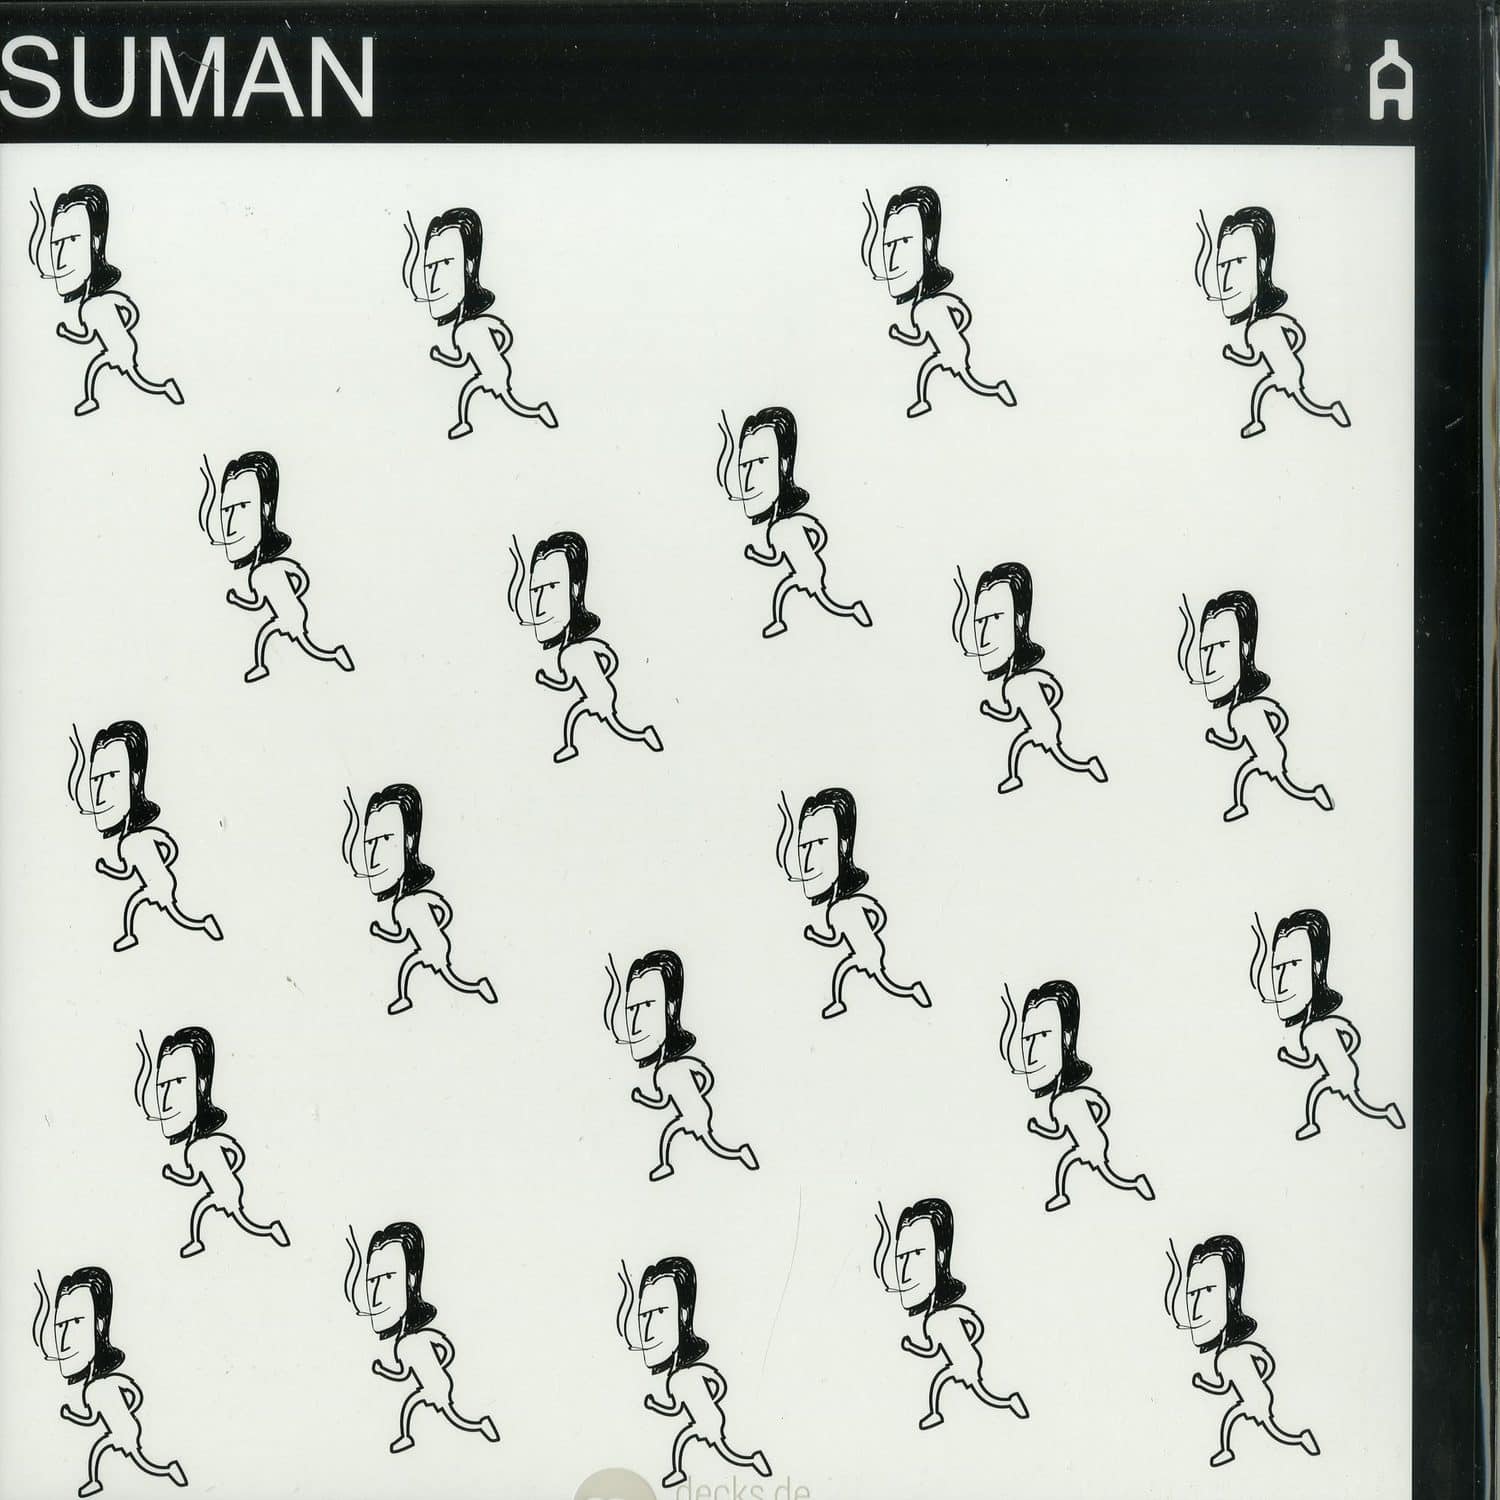 Suman - BOYS AT WORK